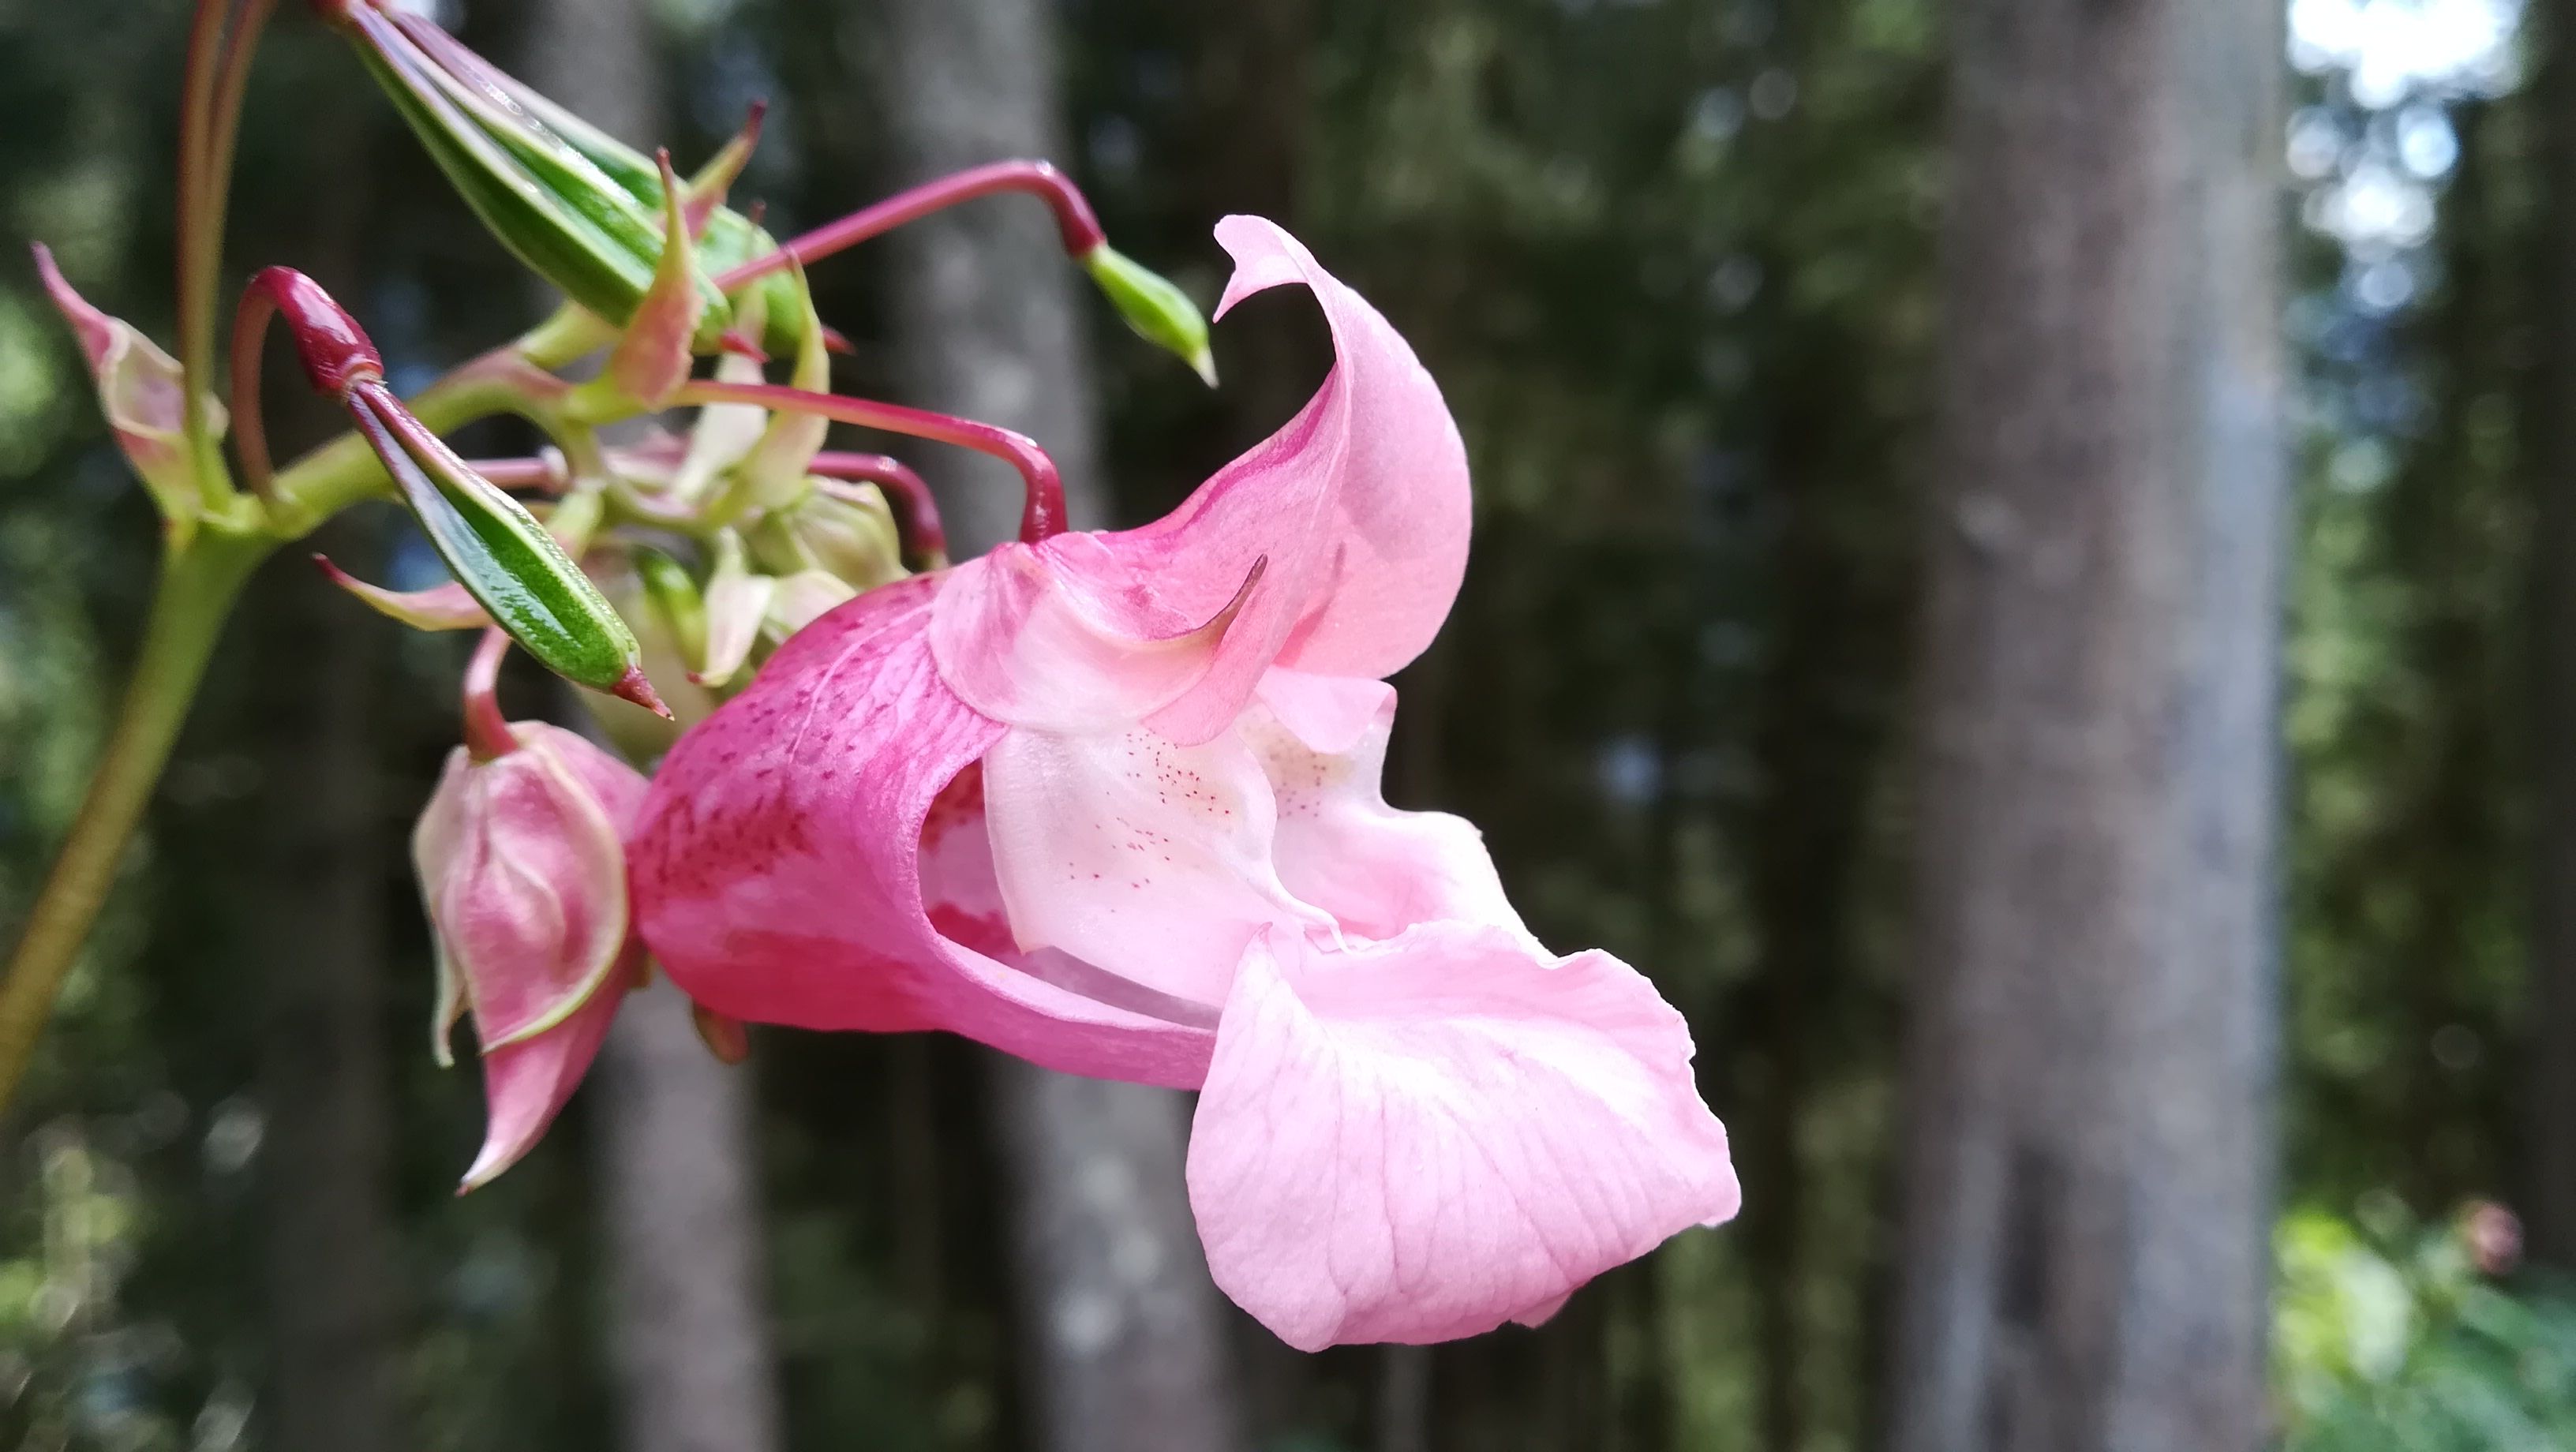 Caption: Indian Balsam flower in the Alps - photo @ermest